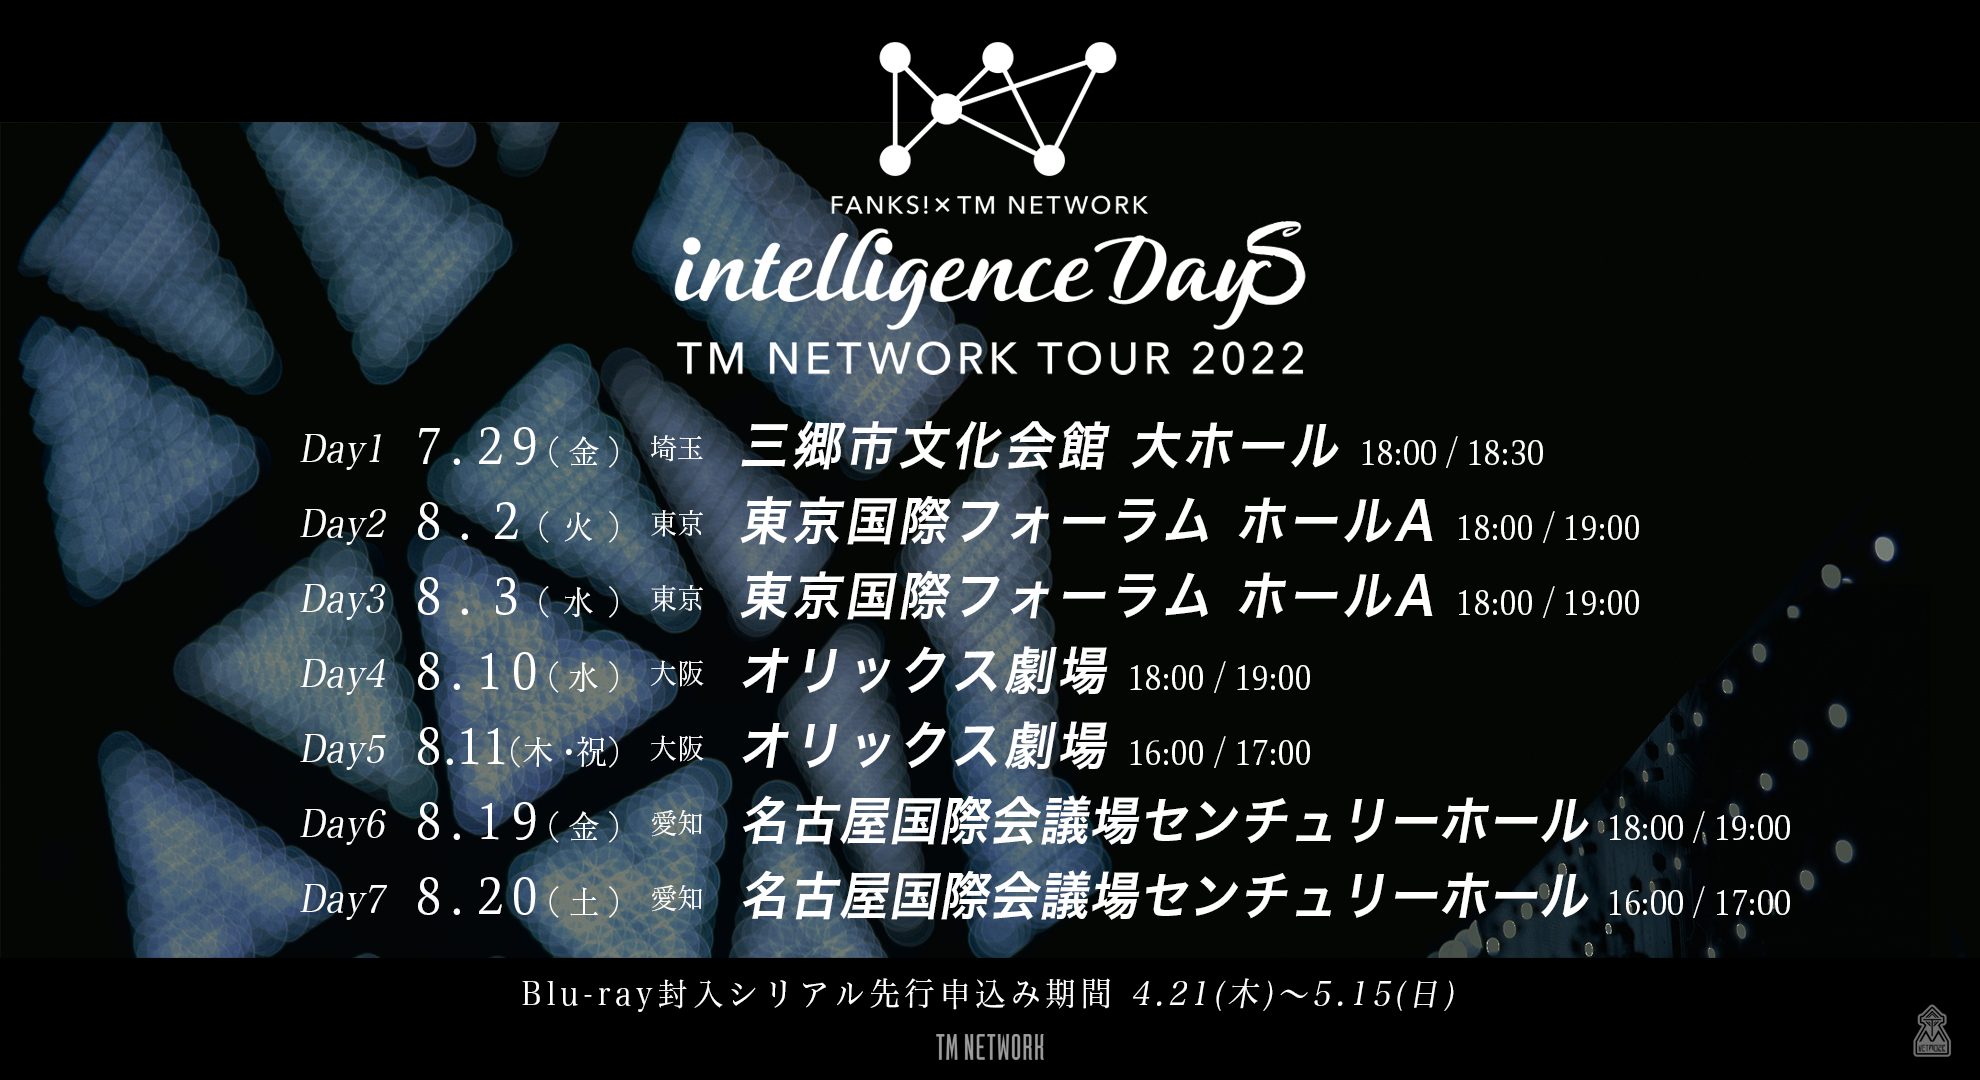 TM NETWORK 7年ぶりのライブツアー 『FANKS intelligence Days』開催 